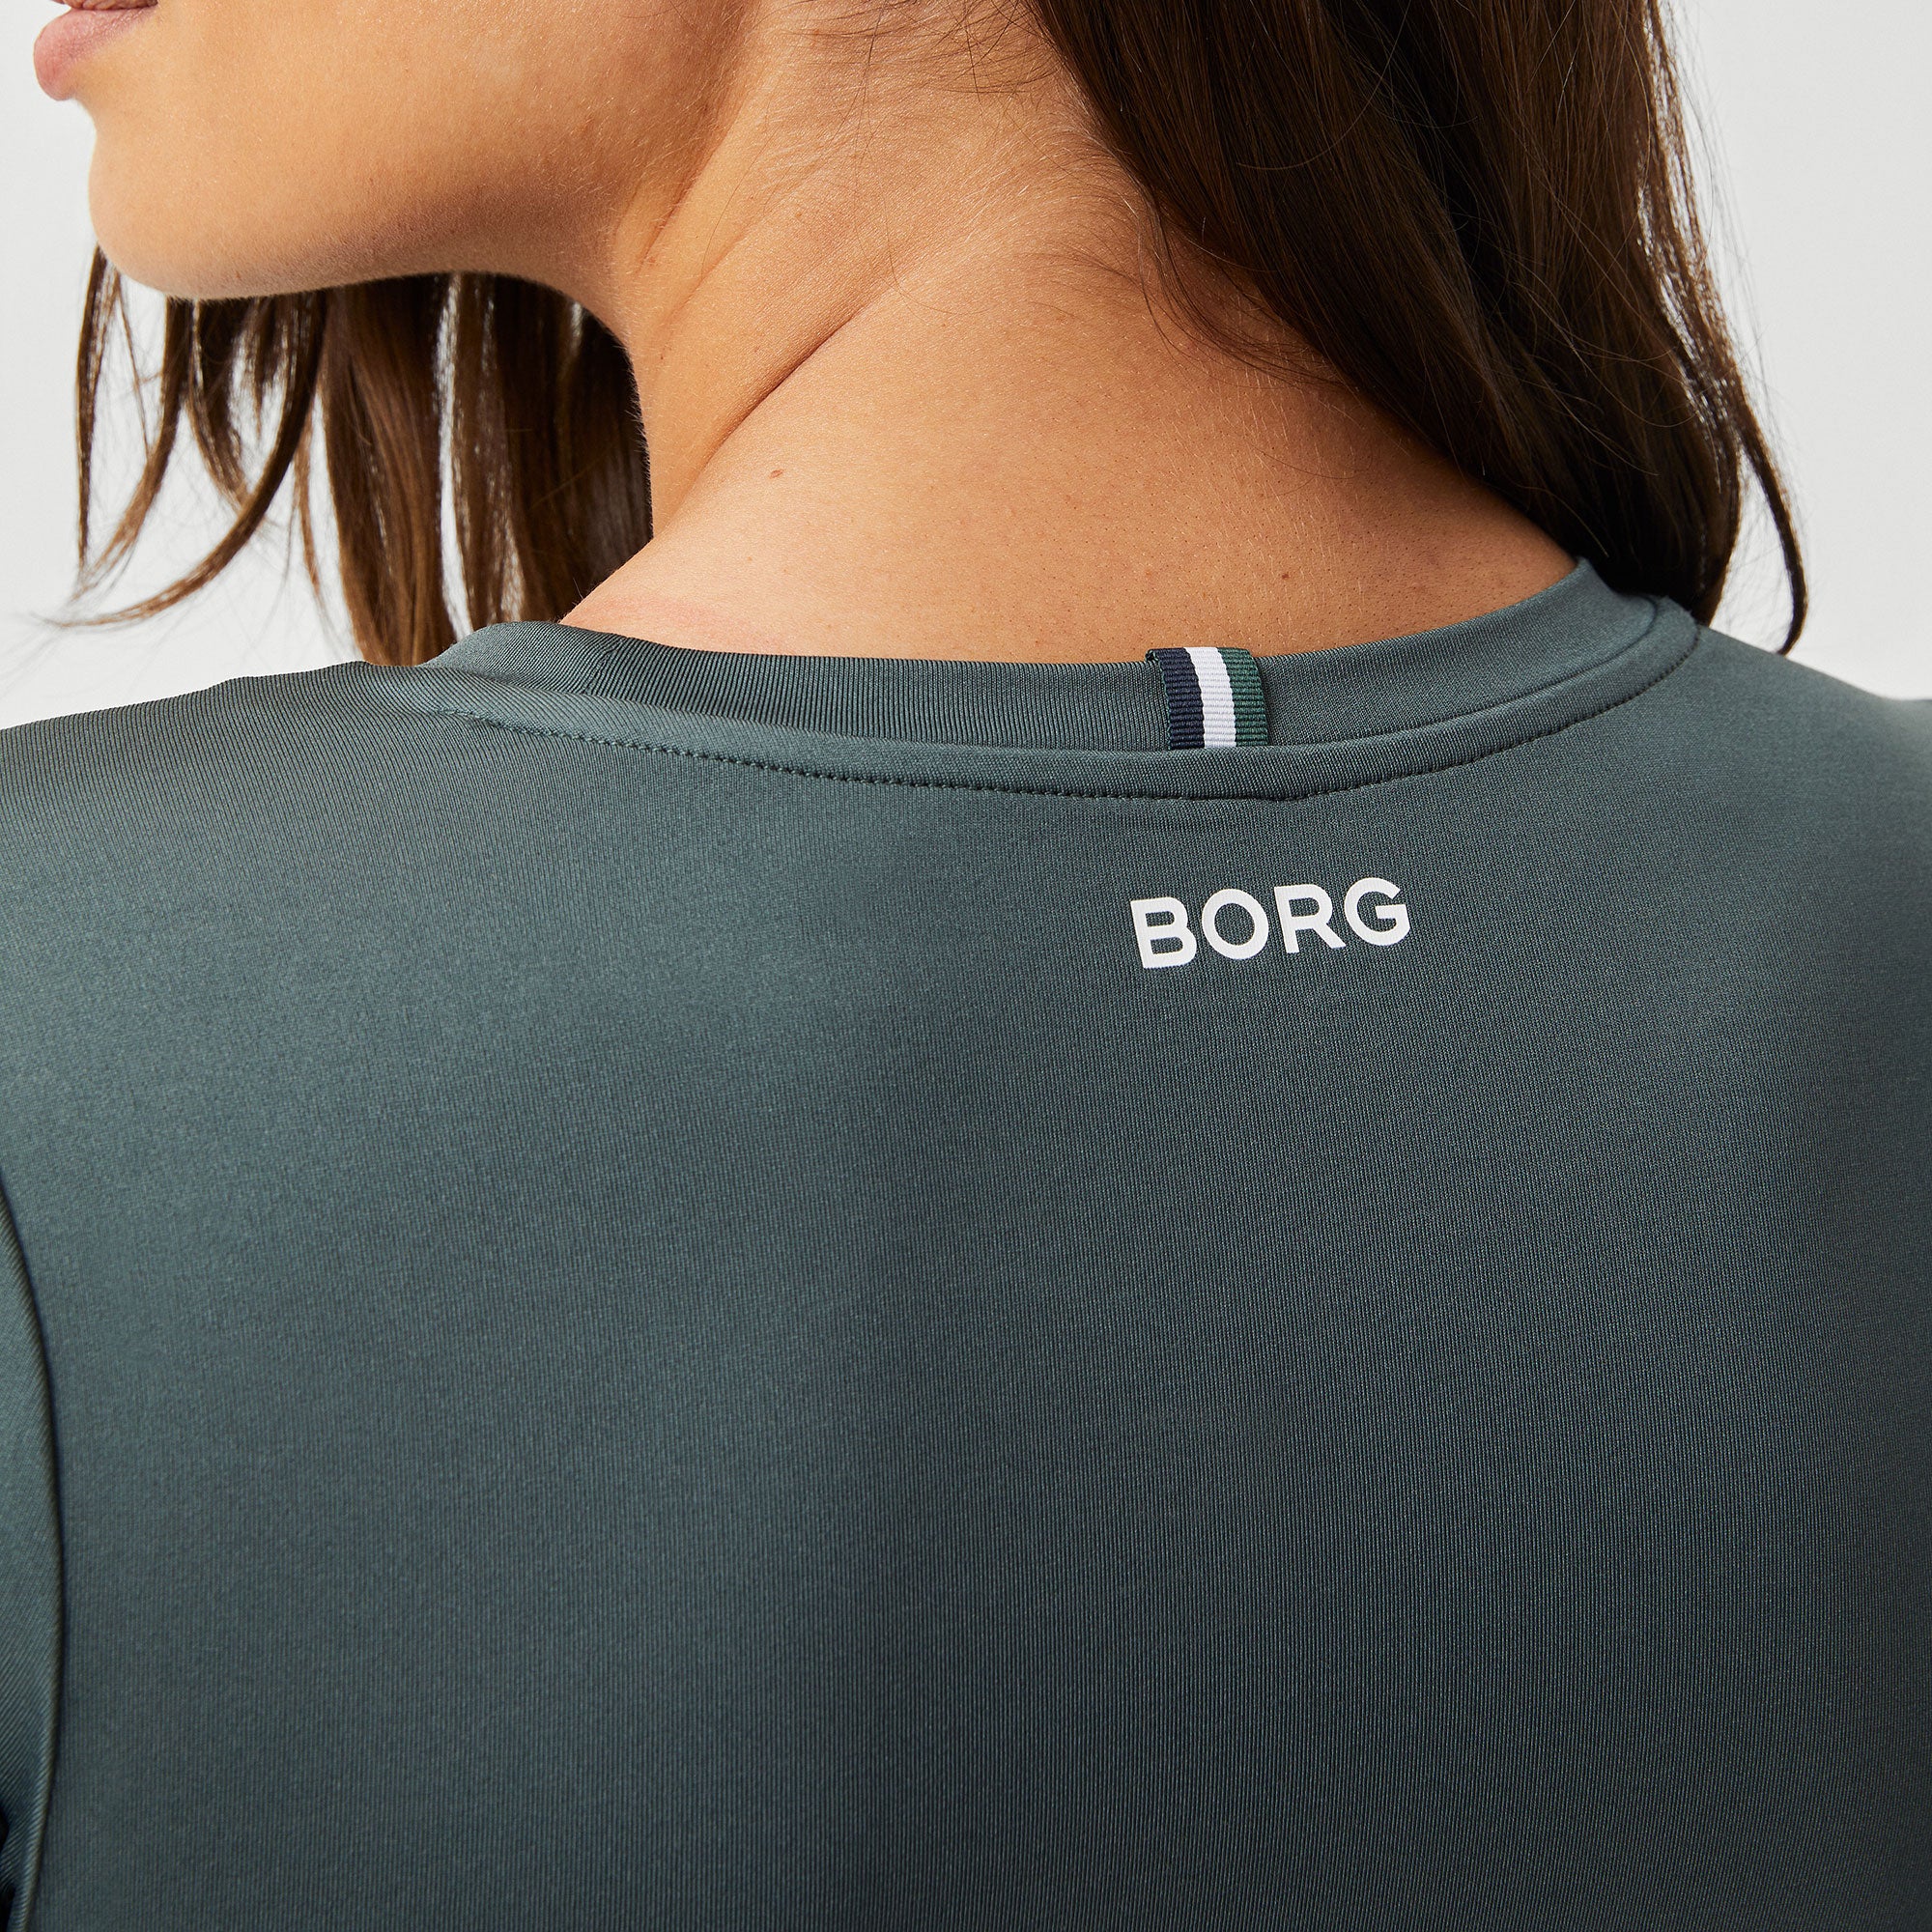 Björn Borg Ace Women's Slim Tennis Shirt - Green (4)